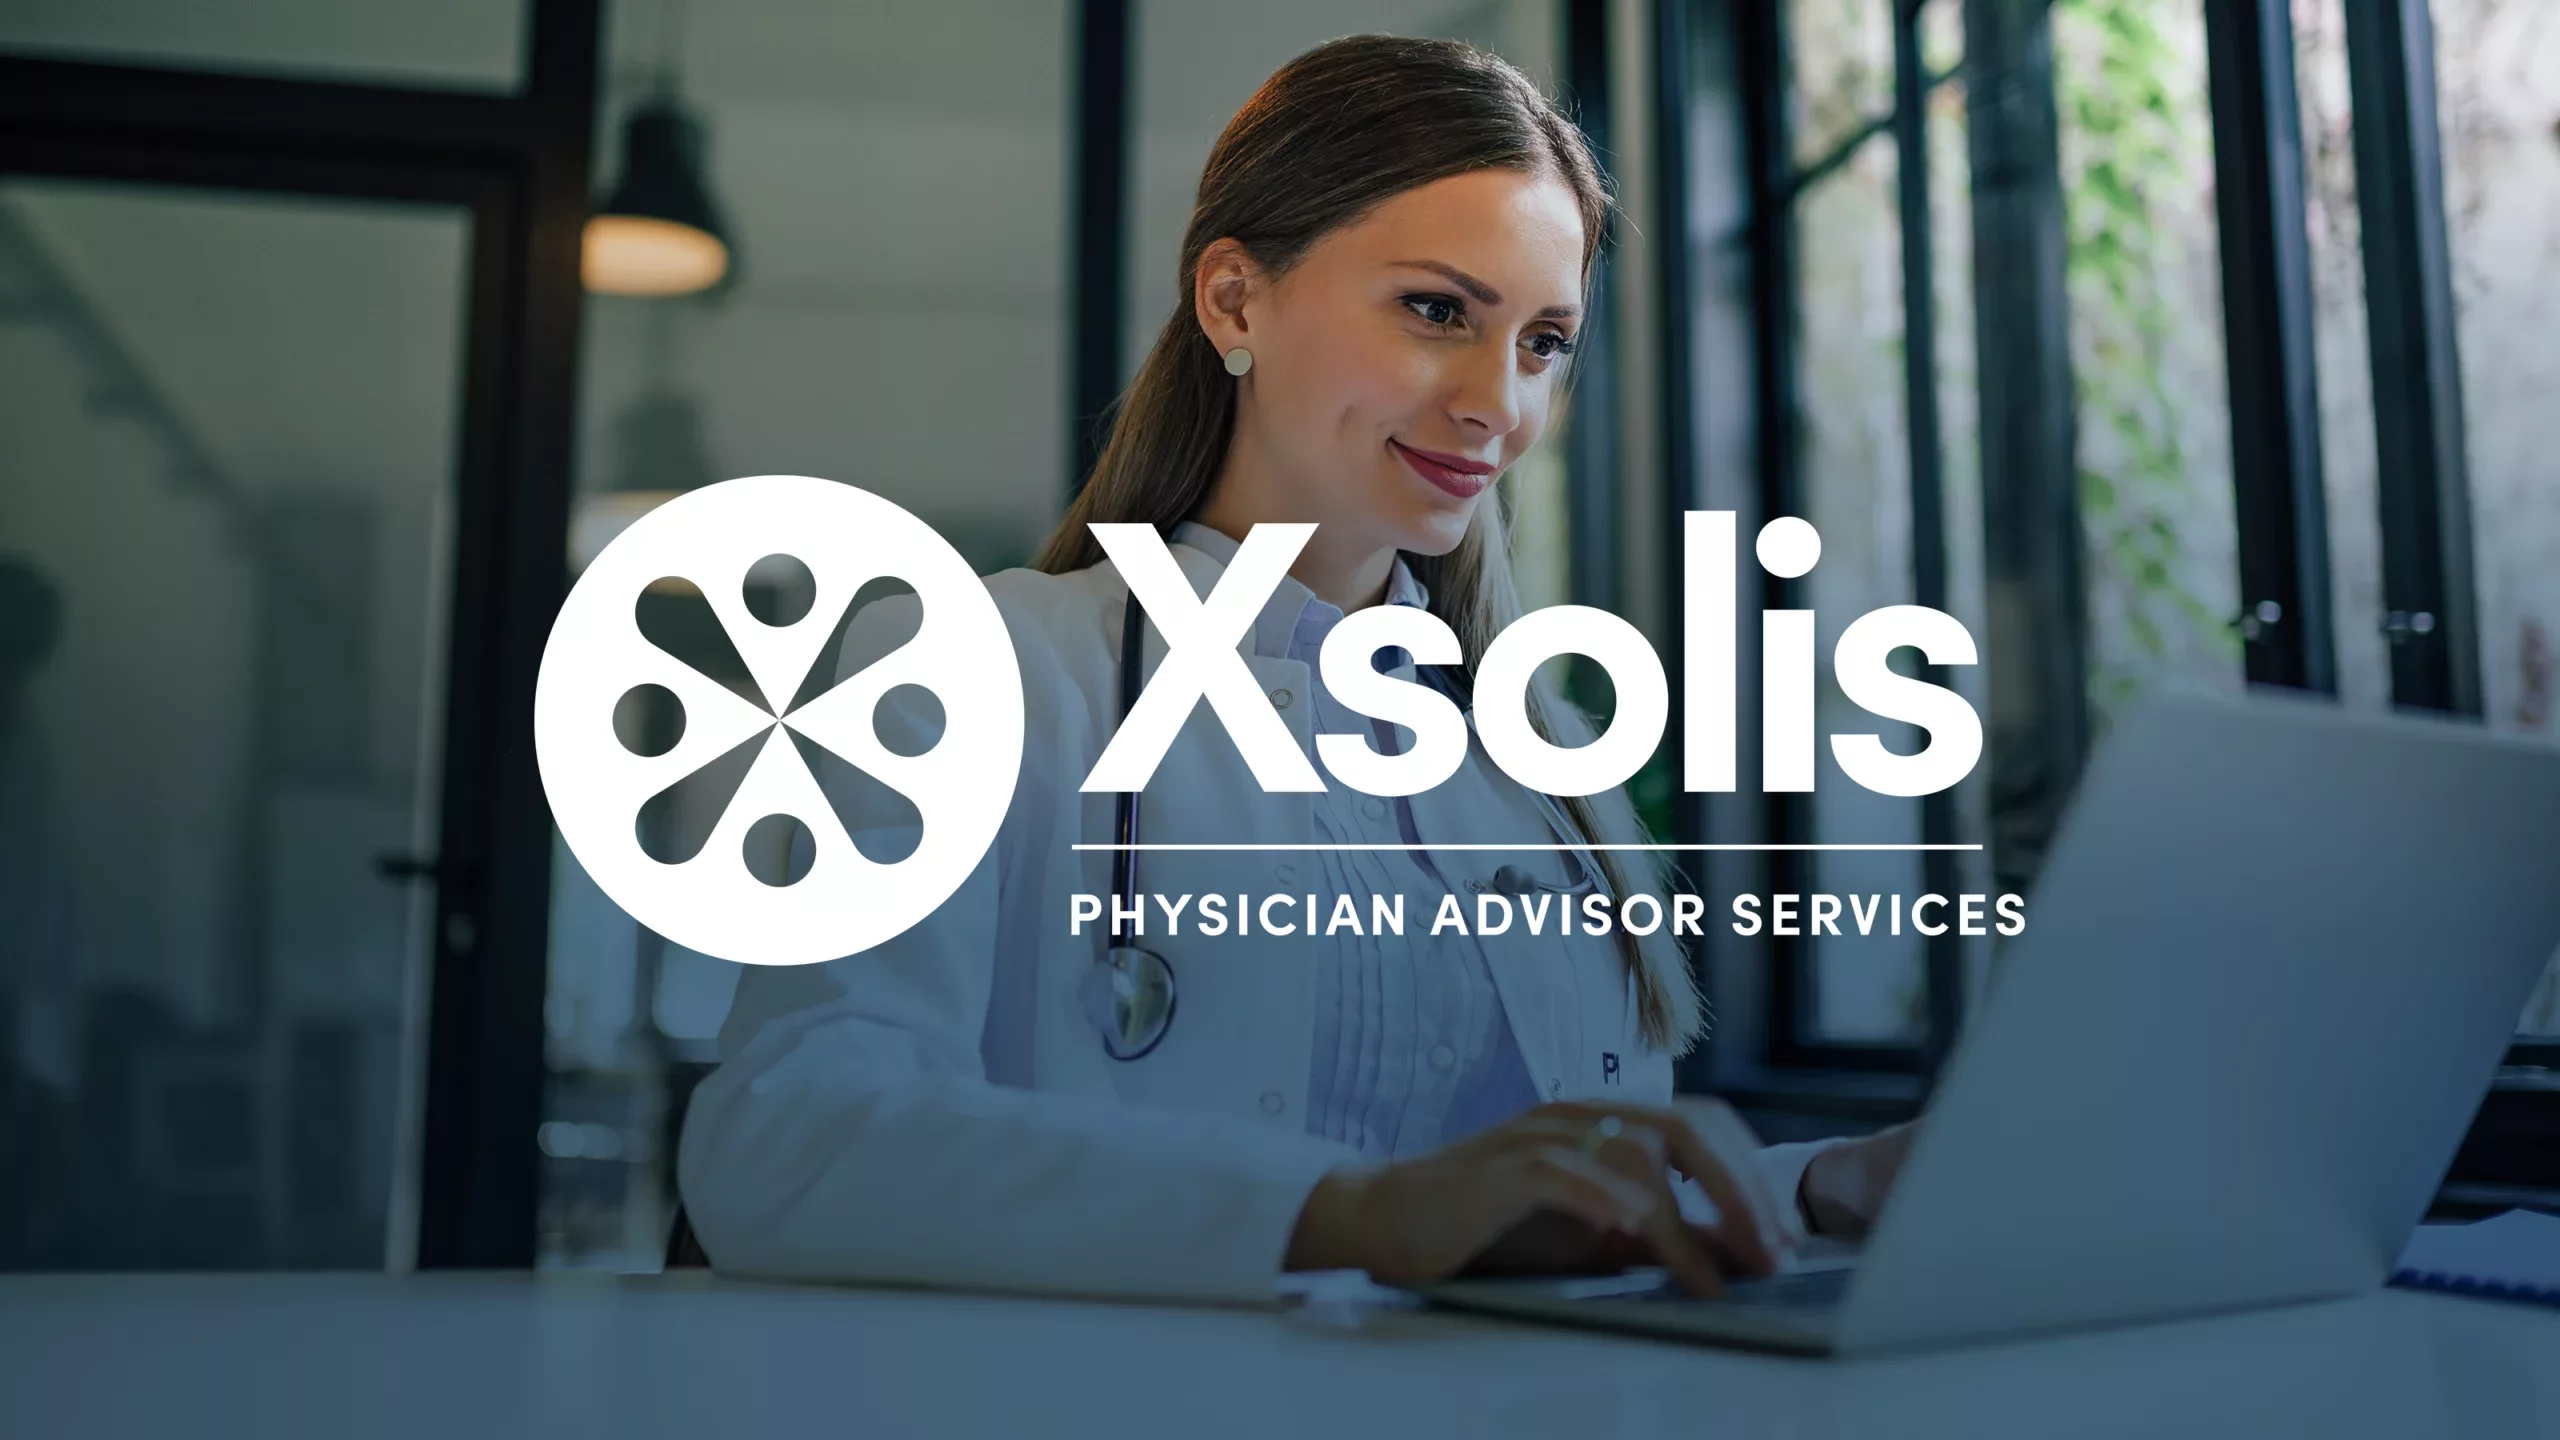 xsolis hysician advisor services logo over PA